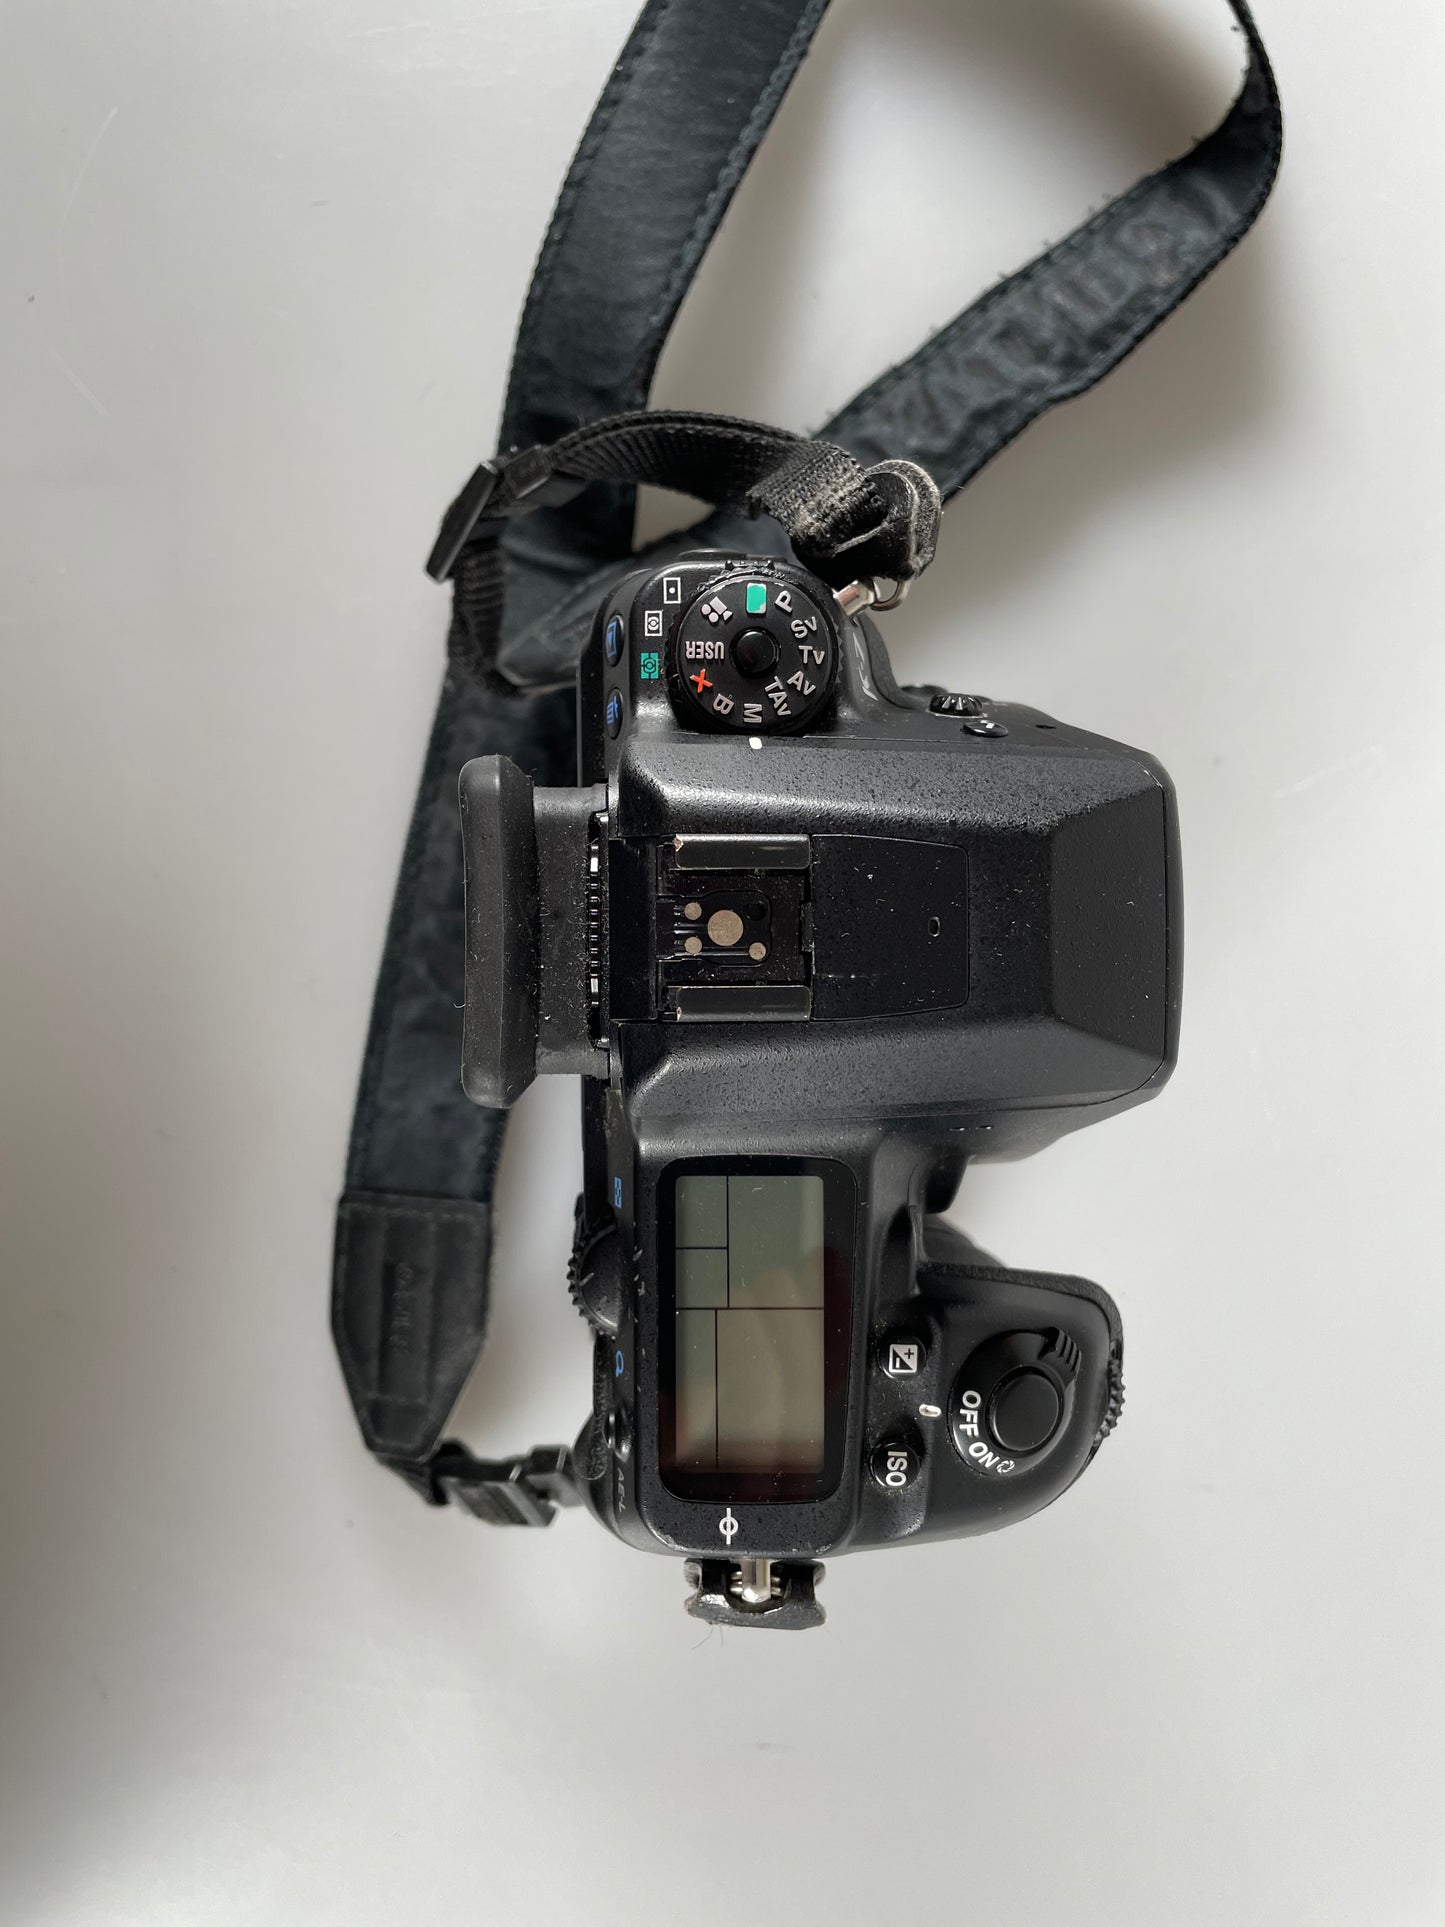 Pentax K-7 14.6 MP Digital SLR DSLR Camera Body with grip